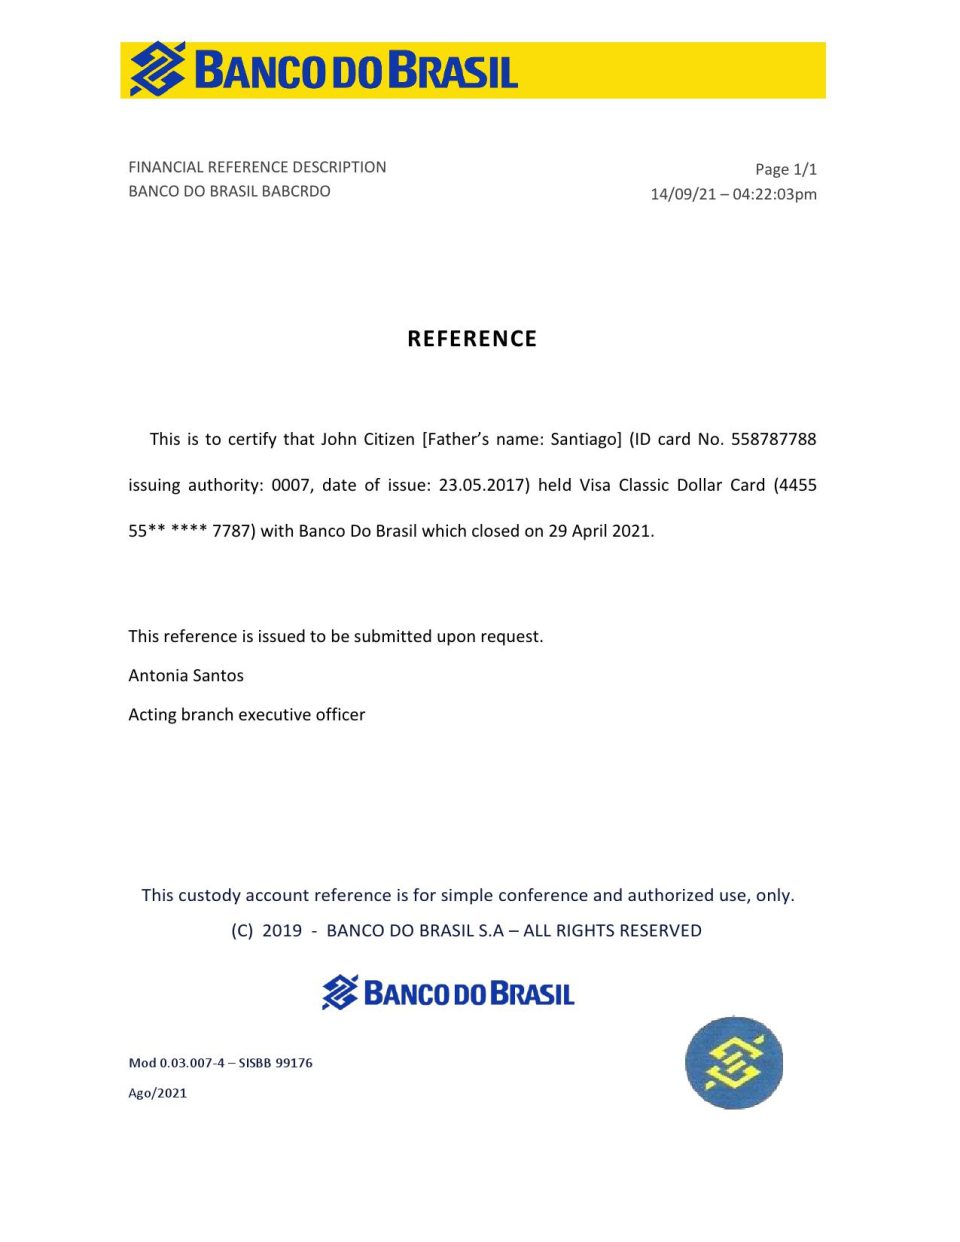 Download Brazil Banco do Brasil Bank Reference Letter Templates | Editable Word